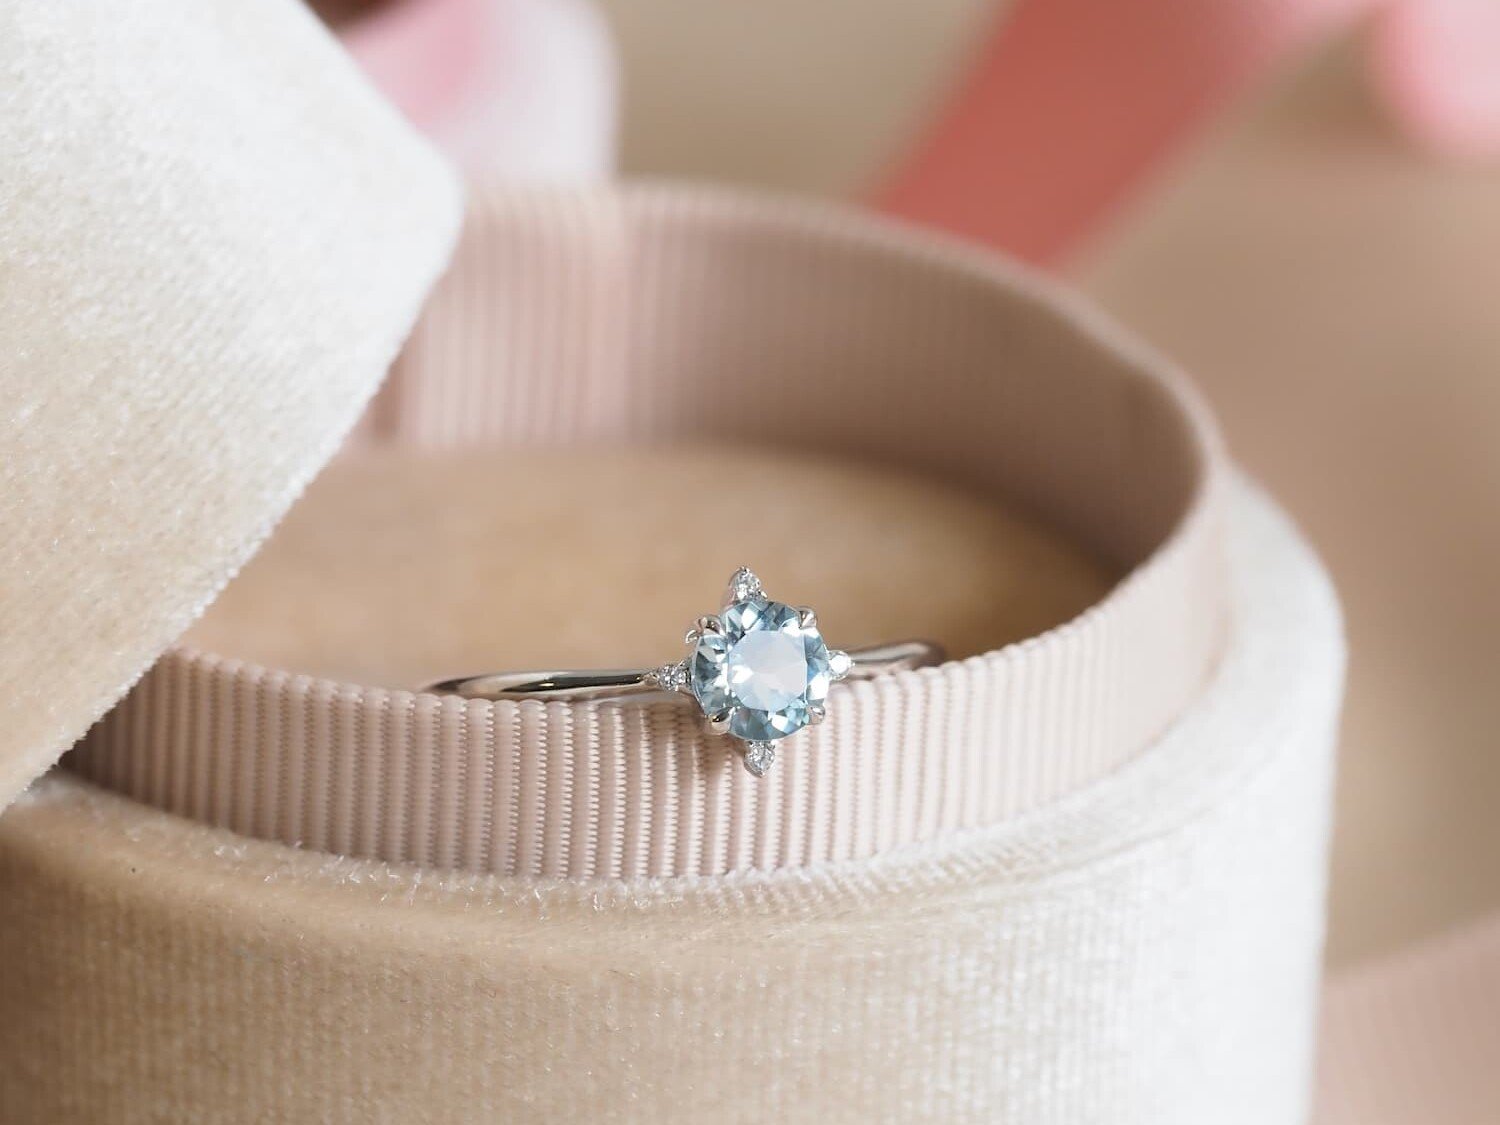 Sophia Aquamarine Engagement Ring with diamonds